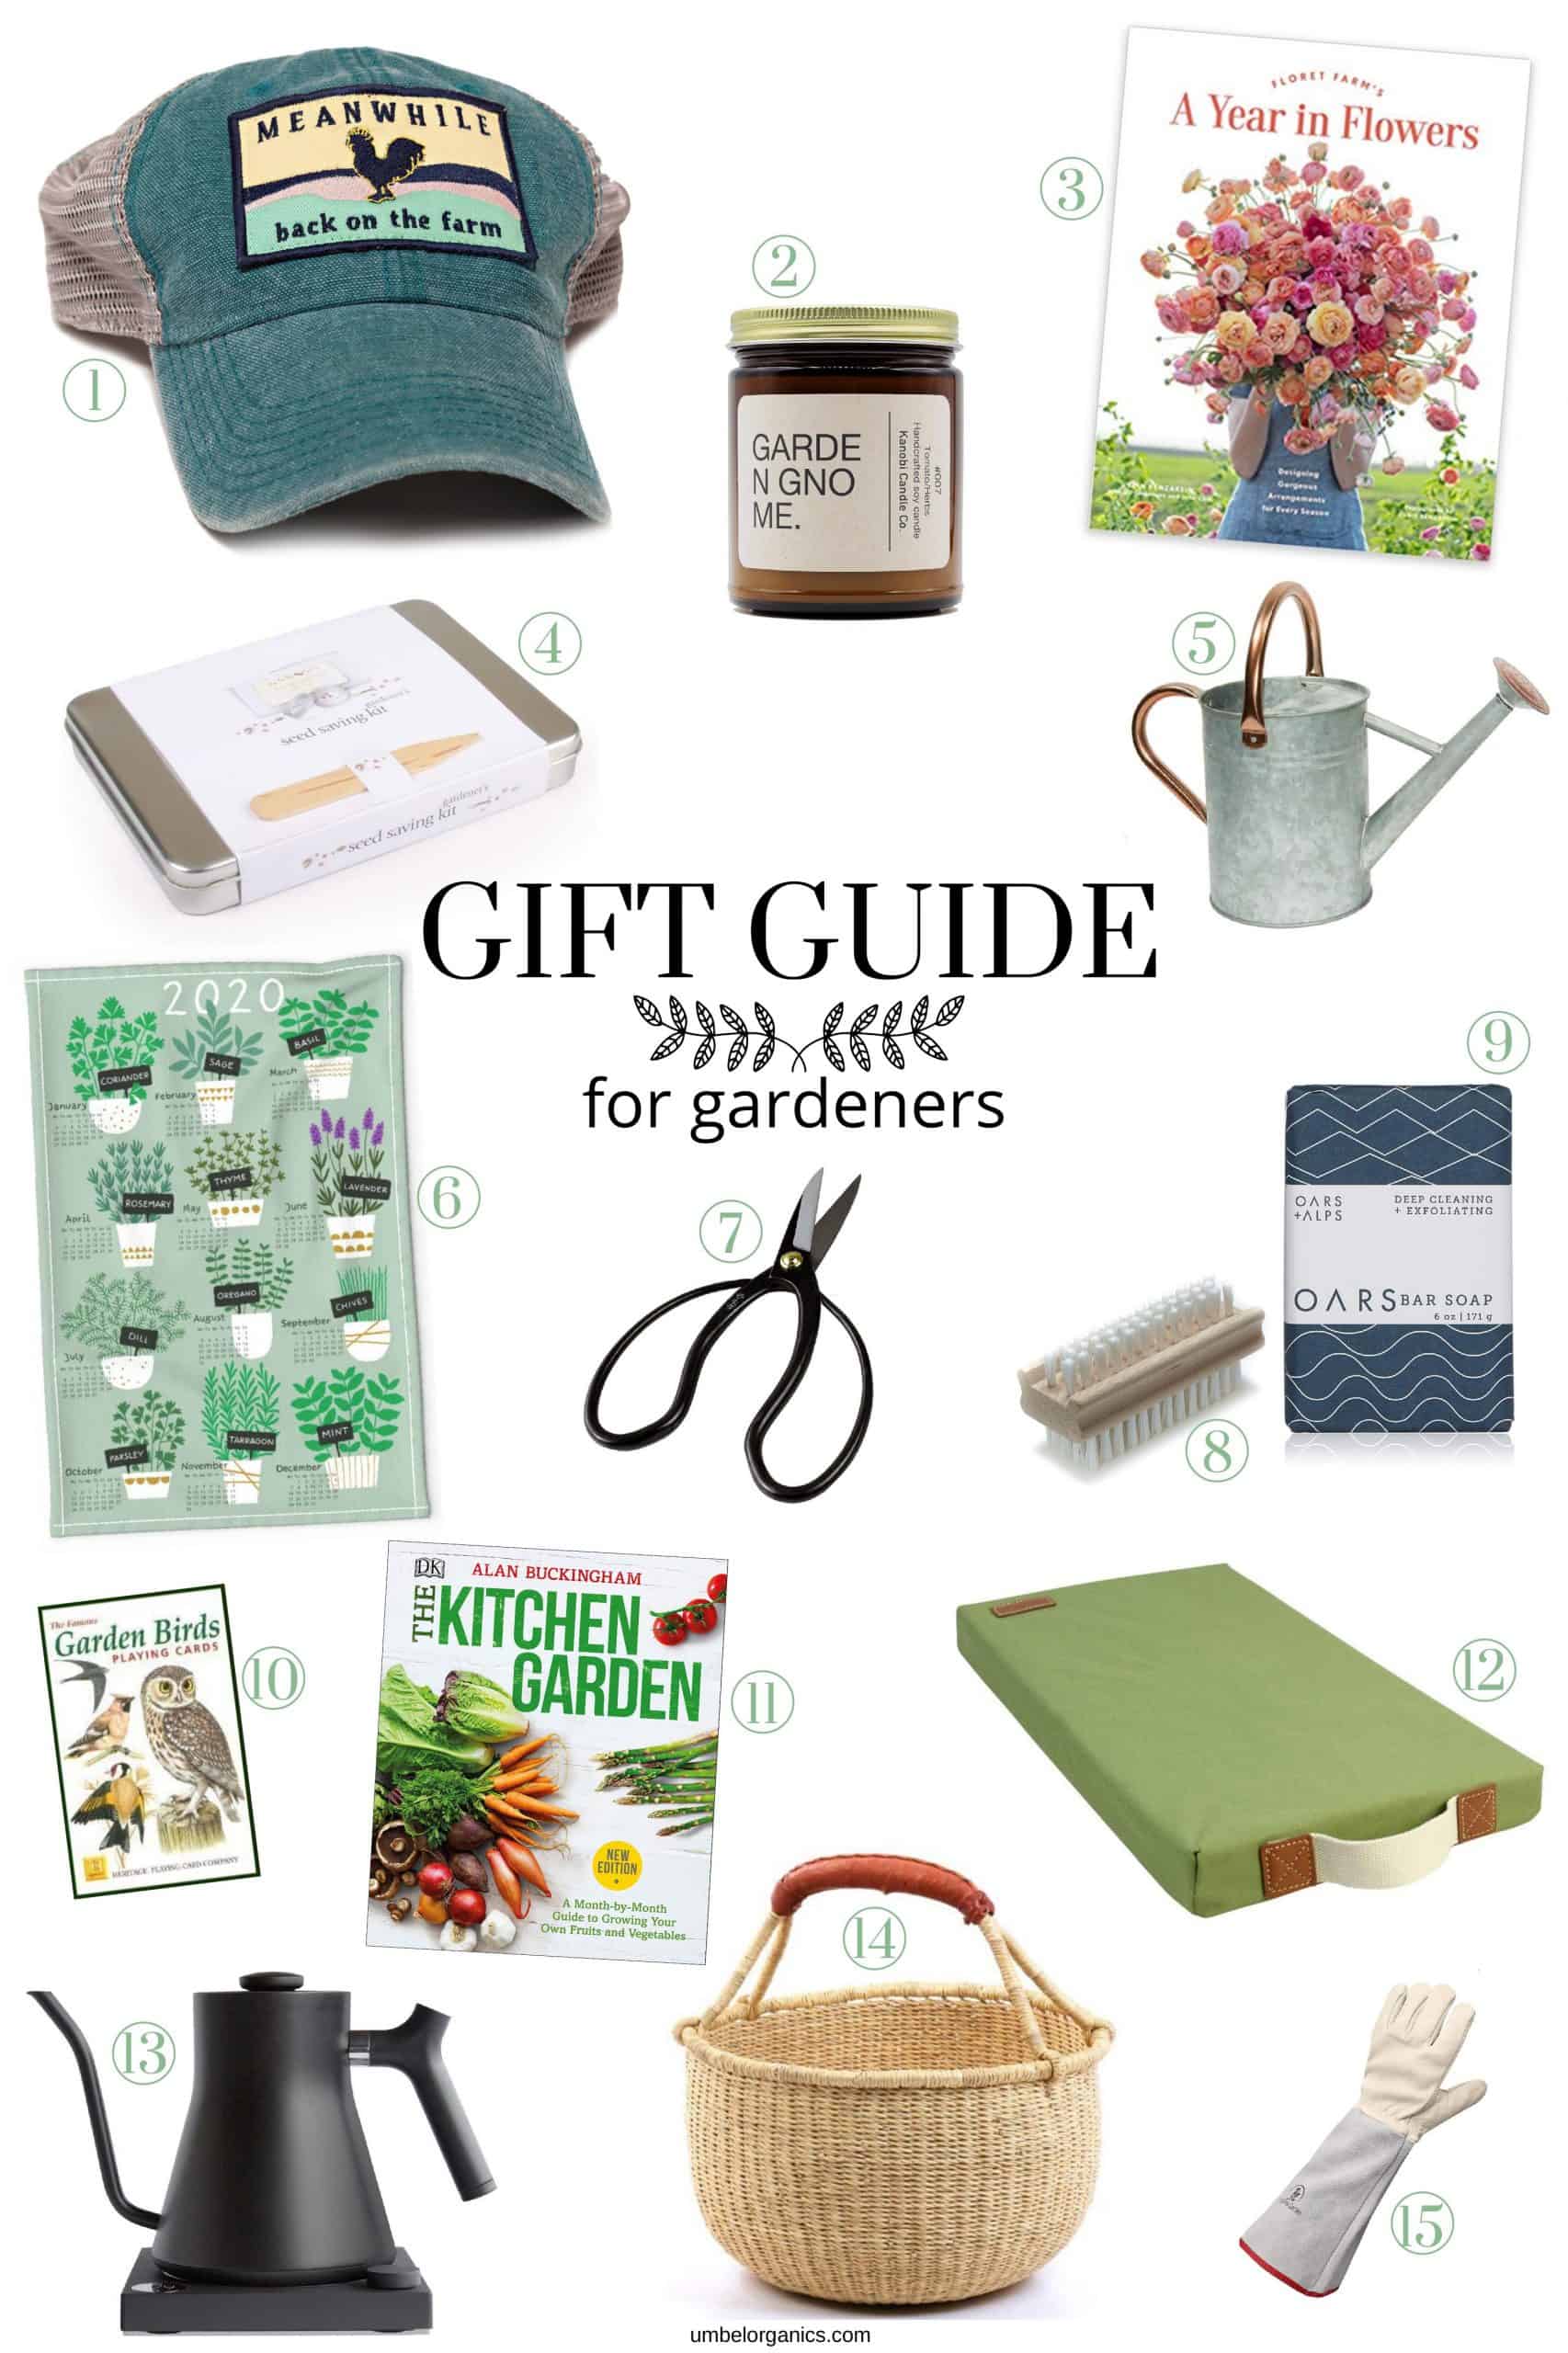 Gift guide for gardeners